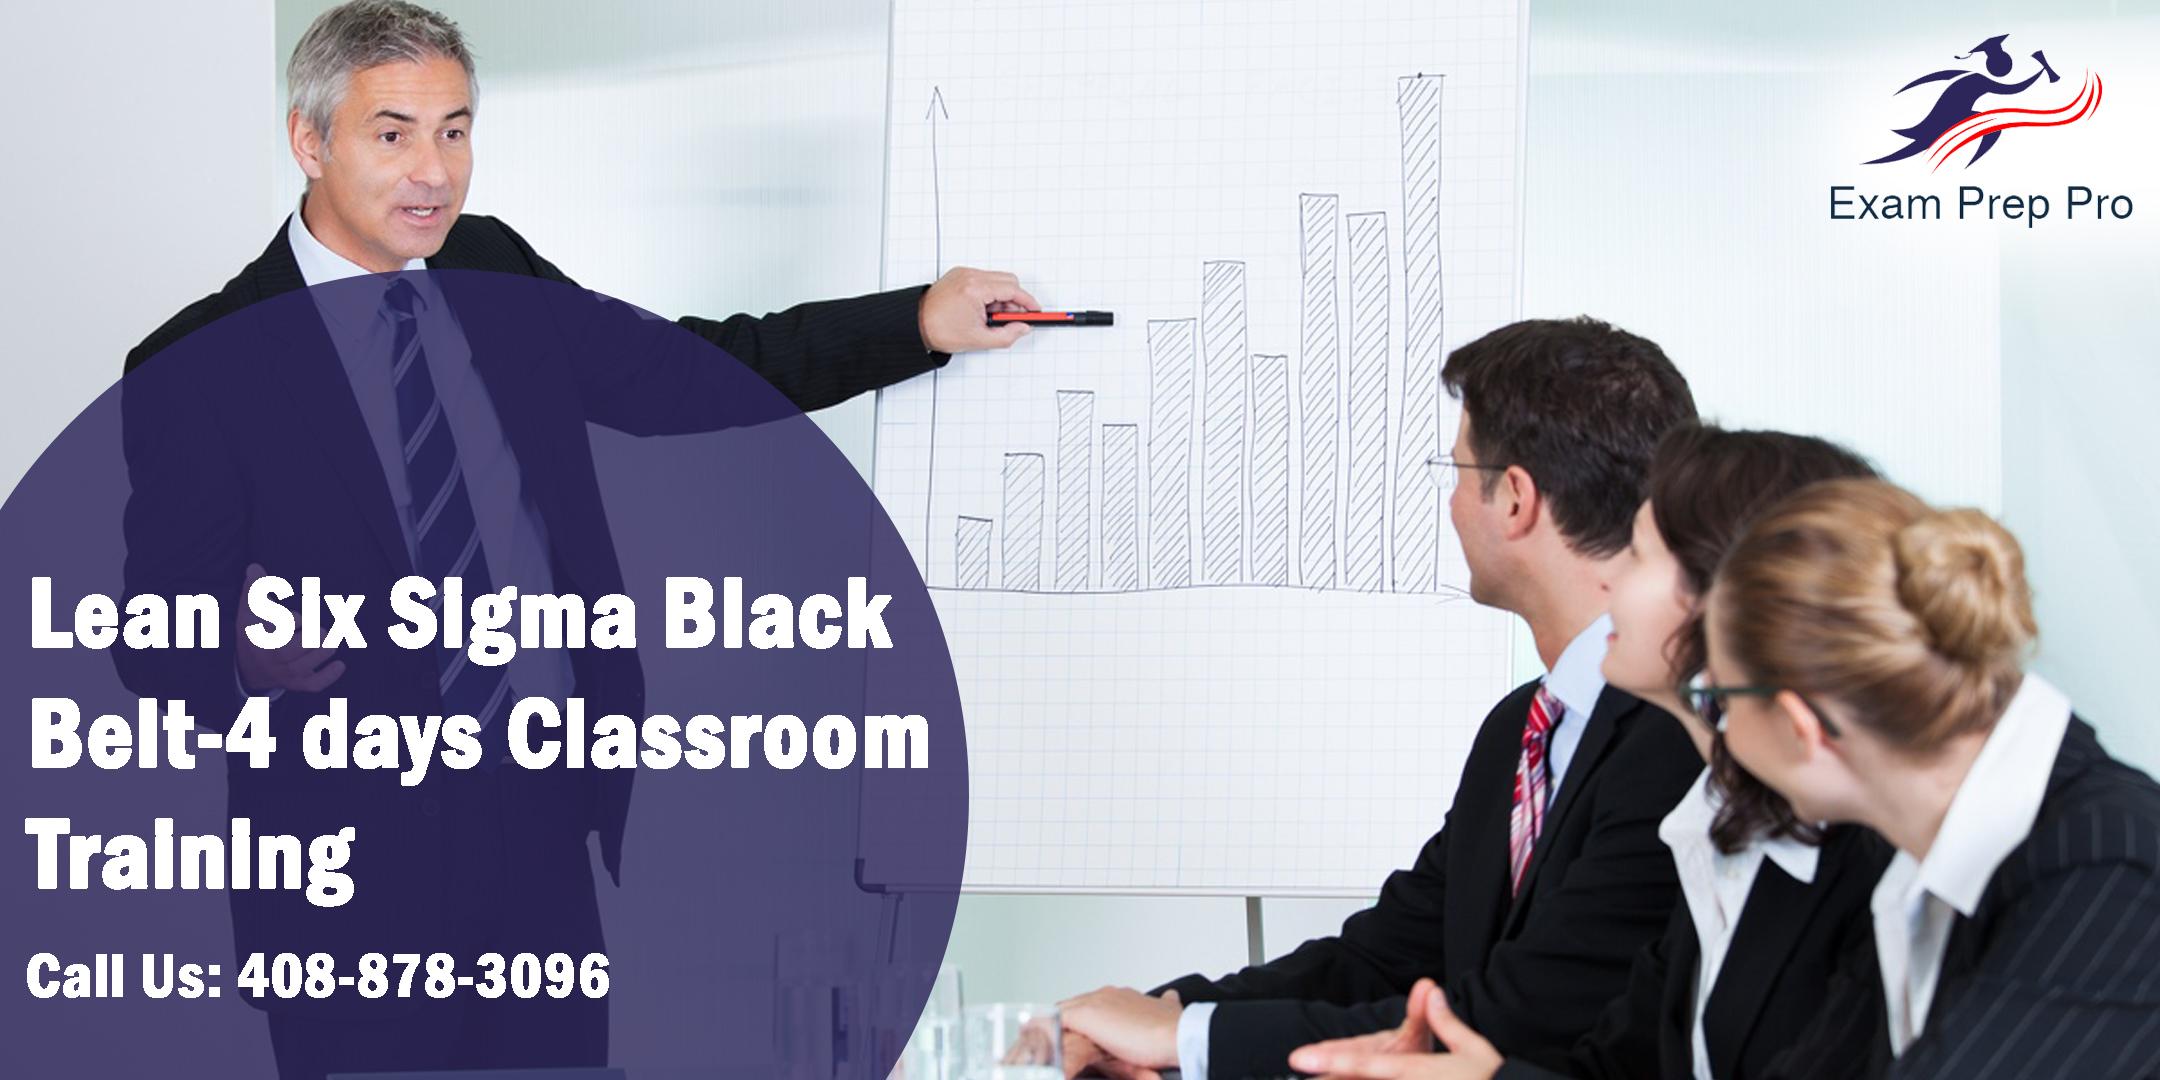 Lean Six Sigma Black Belt-4 days Classroom Training in Richmond, VA